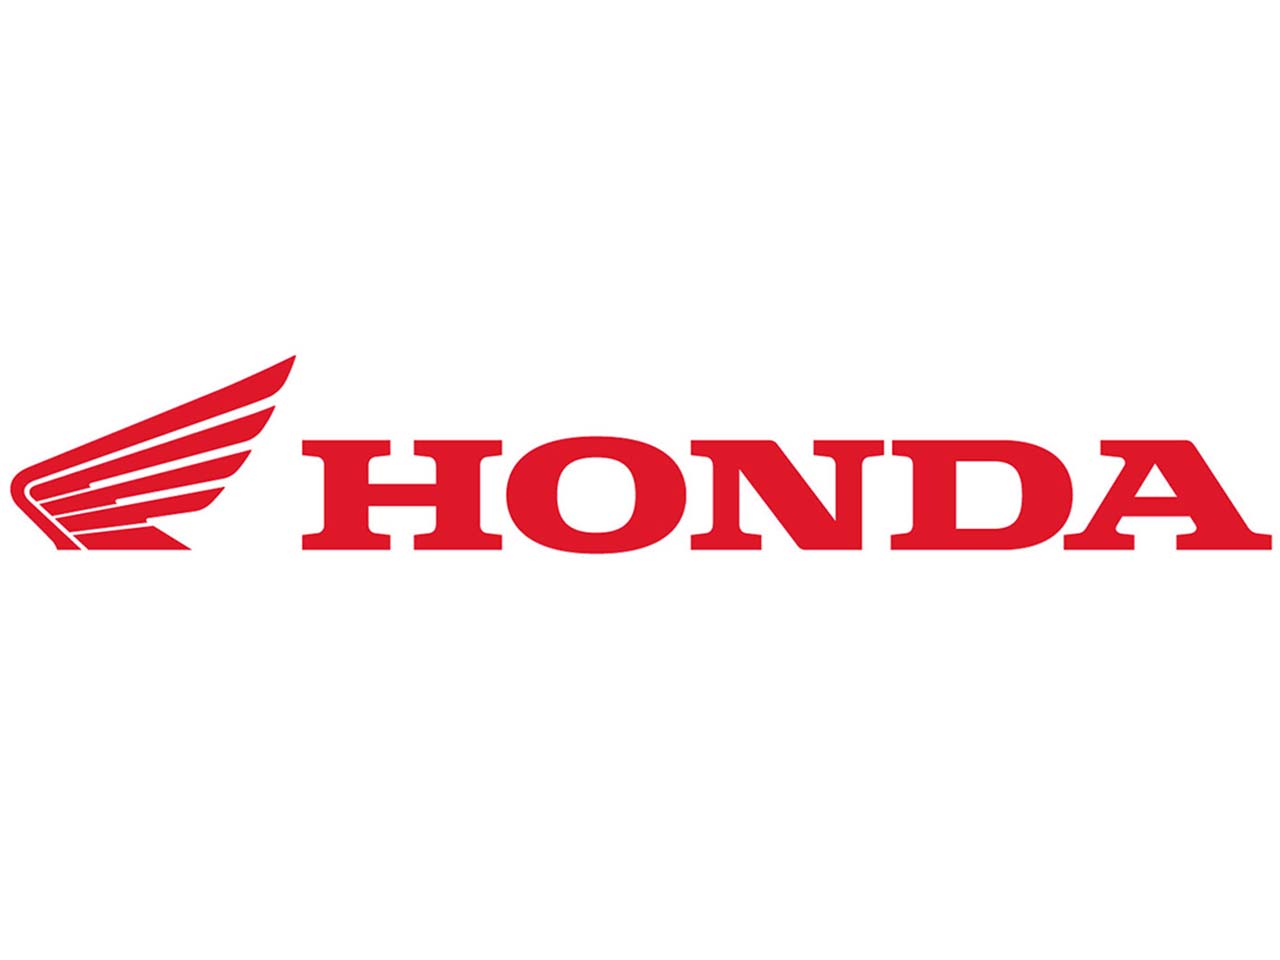 HONDA vector logo free downlo